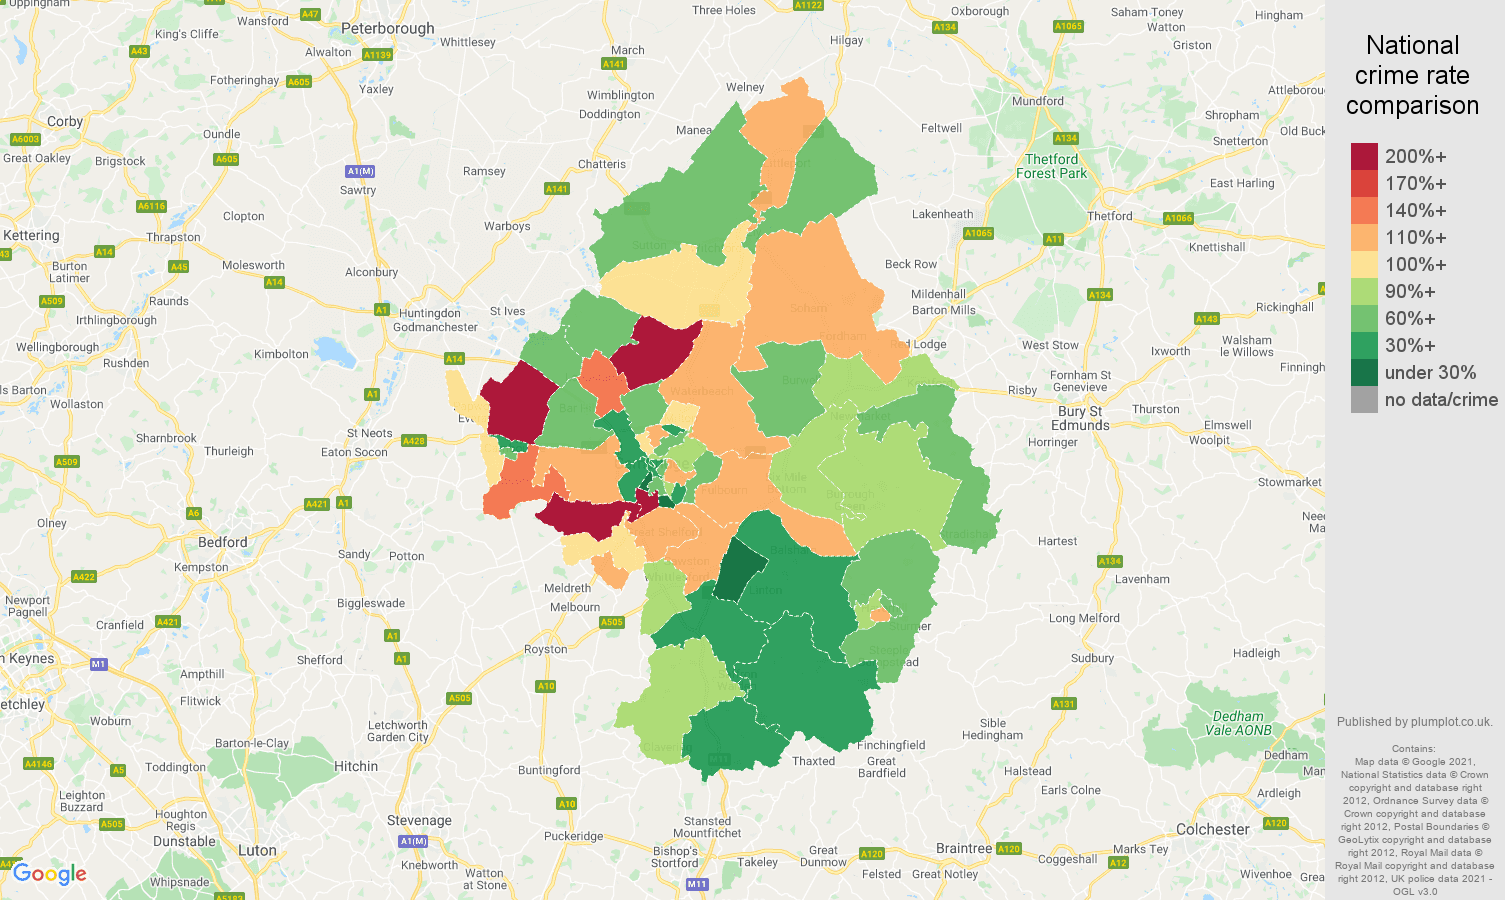 Cambridge burglary crime rate comparison map